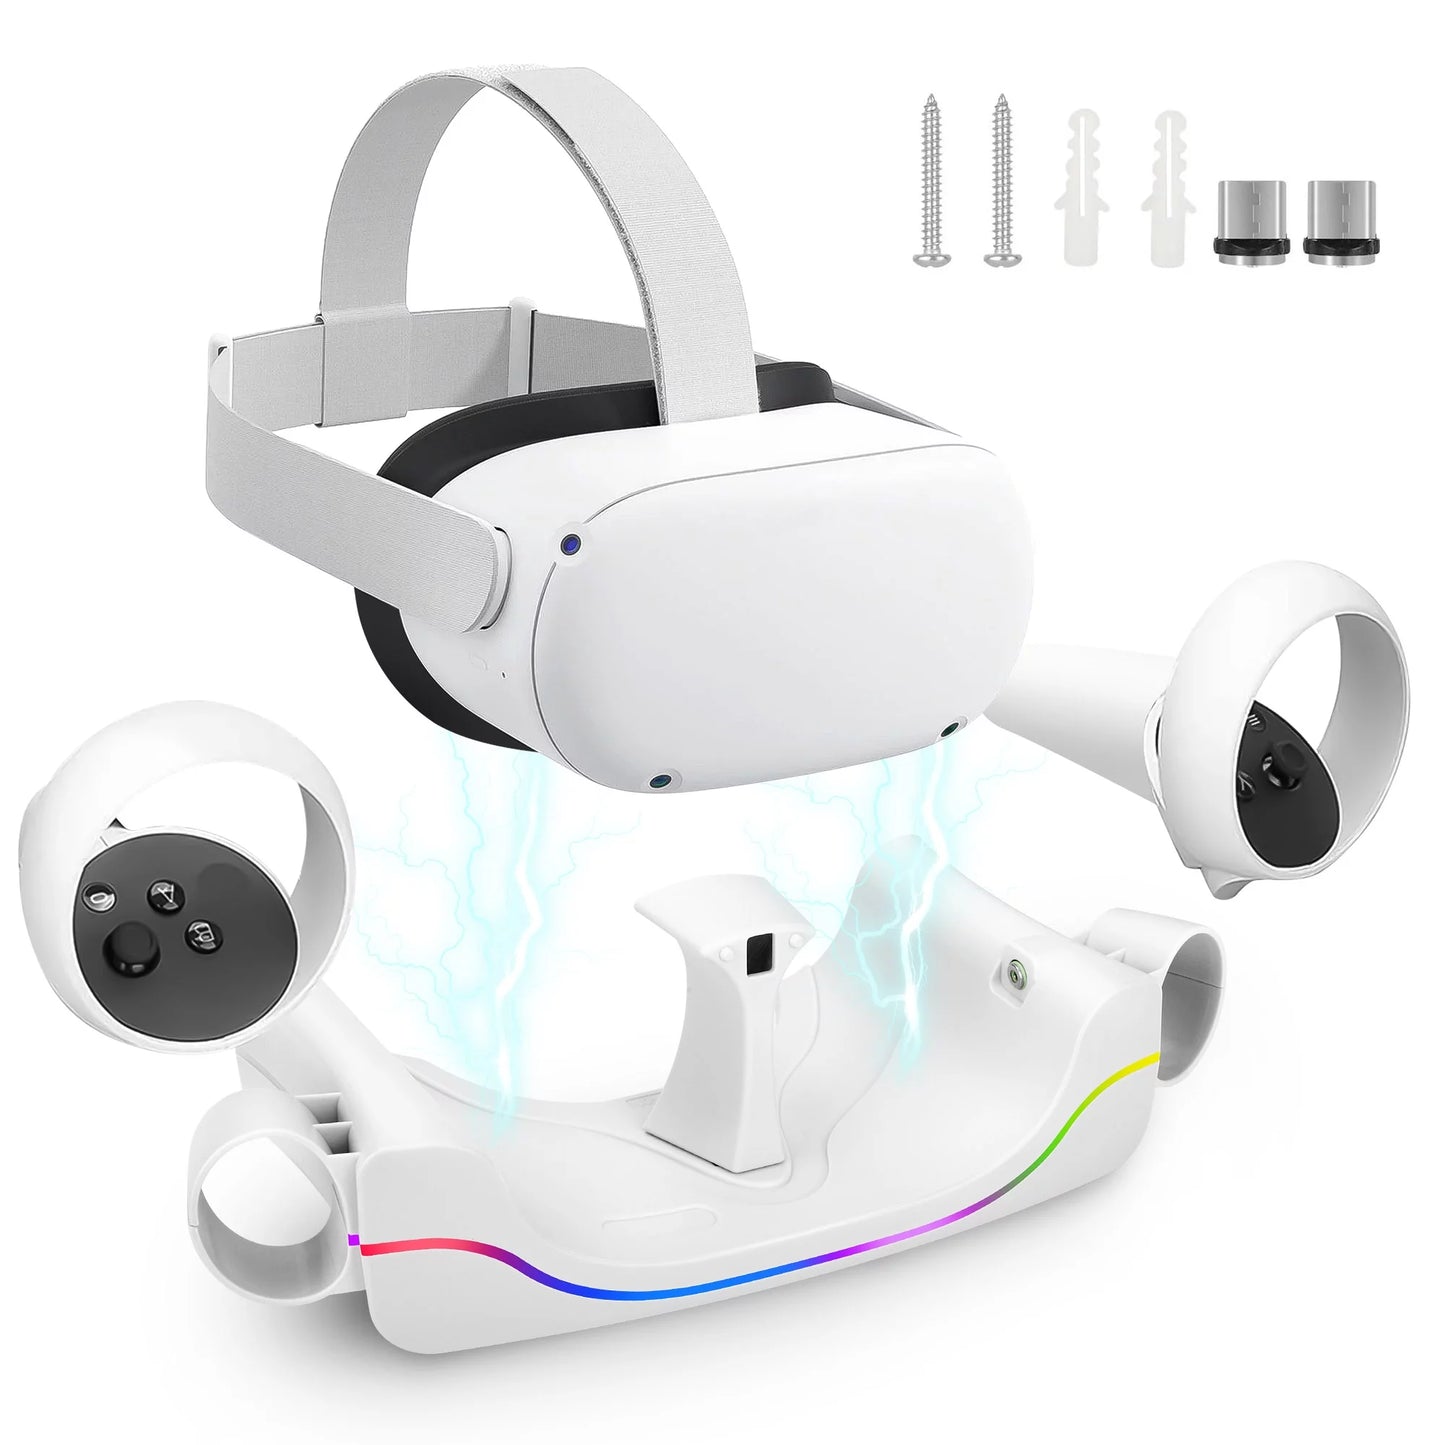 Charging Station Fit for Oculus/Meta Quest 2 Headset, VR Magnetic Charging Dock, VR Headset Display Holder Controller Mount Station with LED Indicator